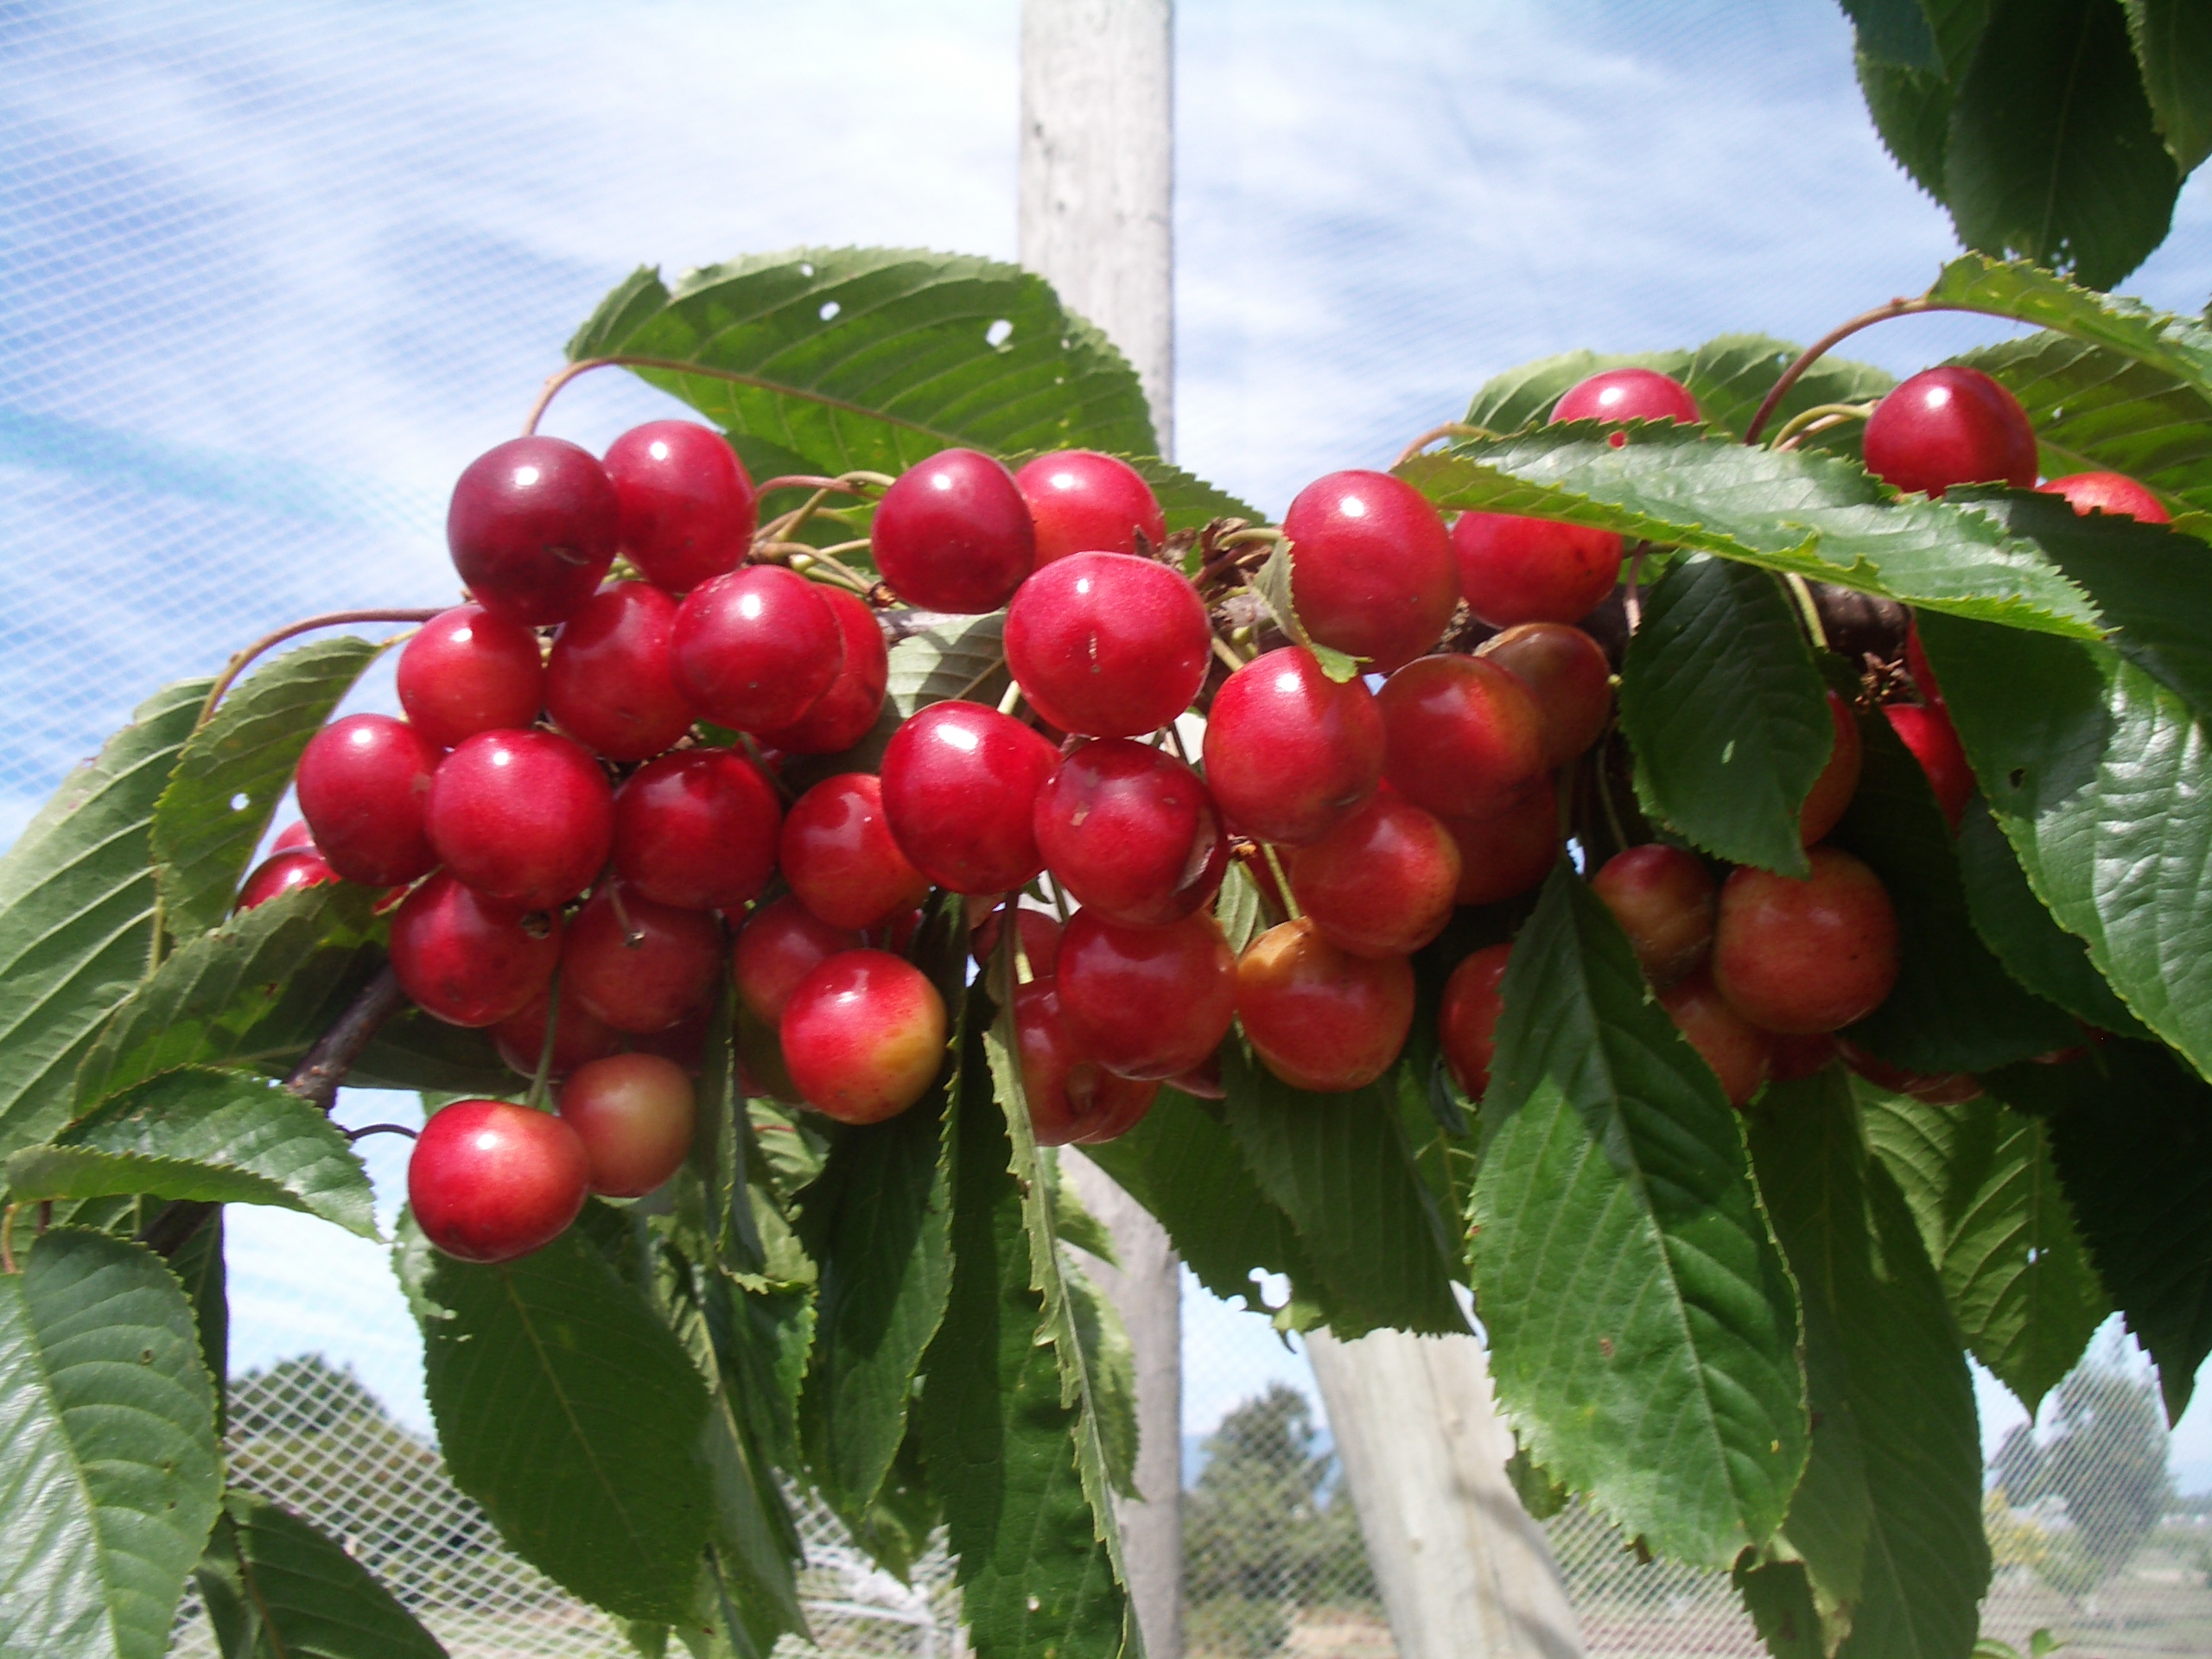 Washington retailers encourage promotion of cherries during June peak